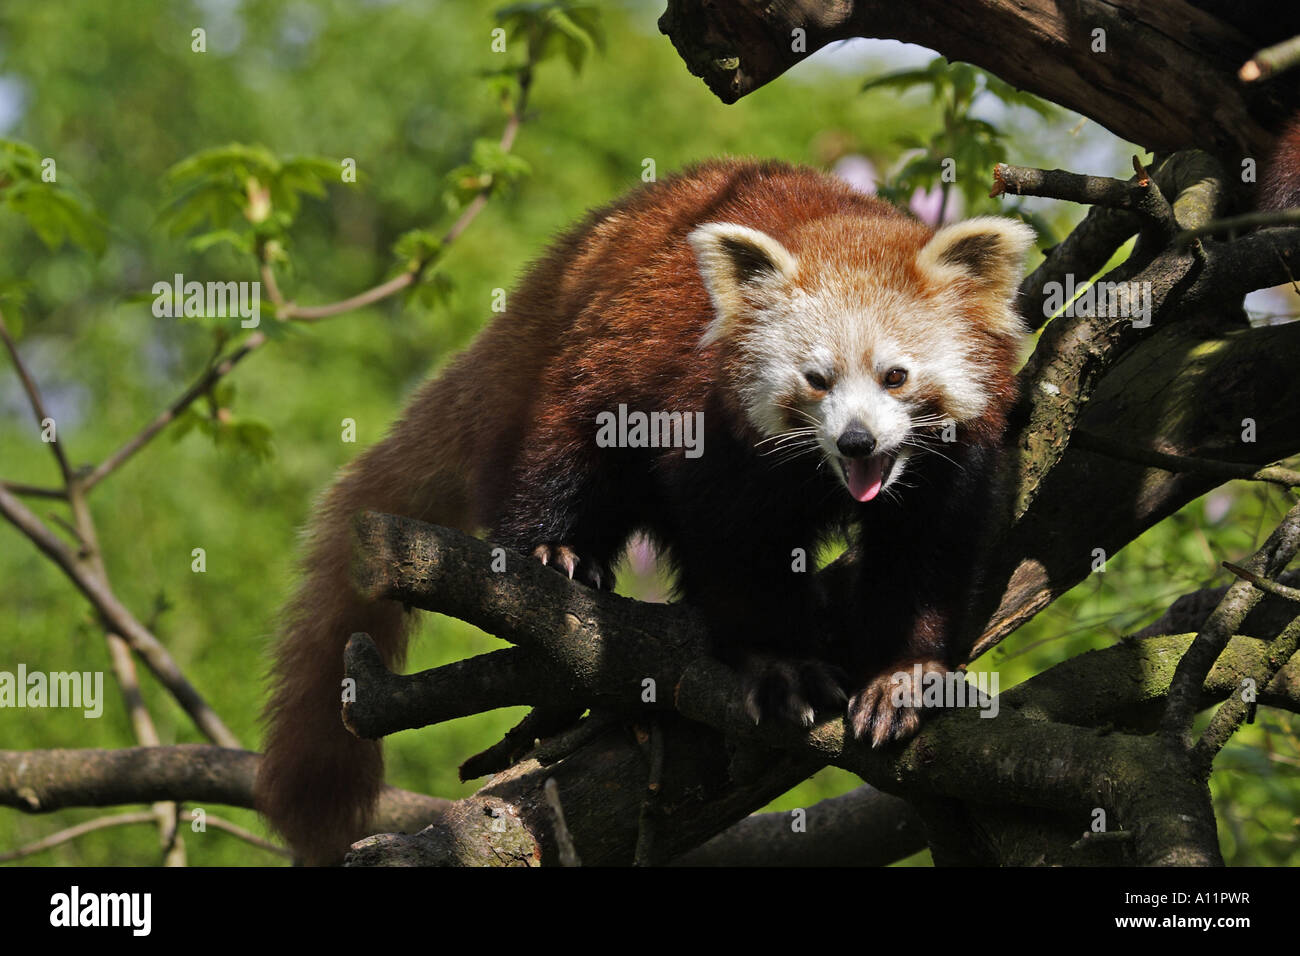 -Fotos bar und – Panda in -Bildmaterial Auflösung Alamy hoher